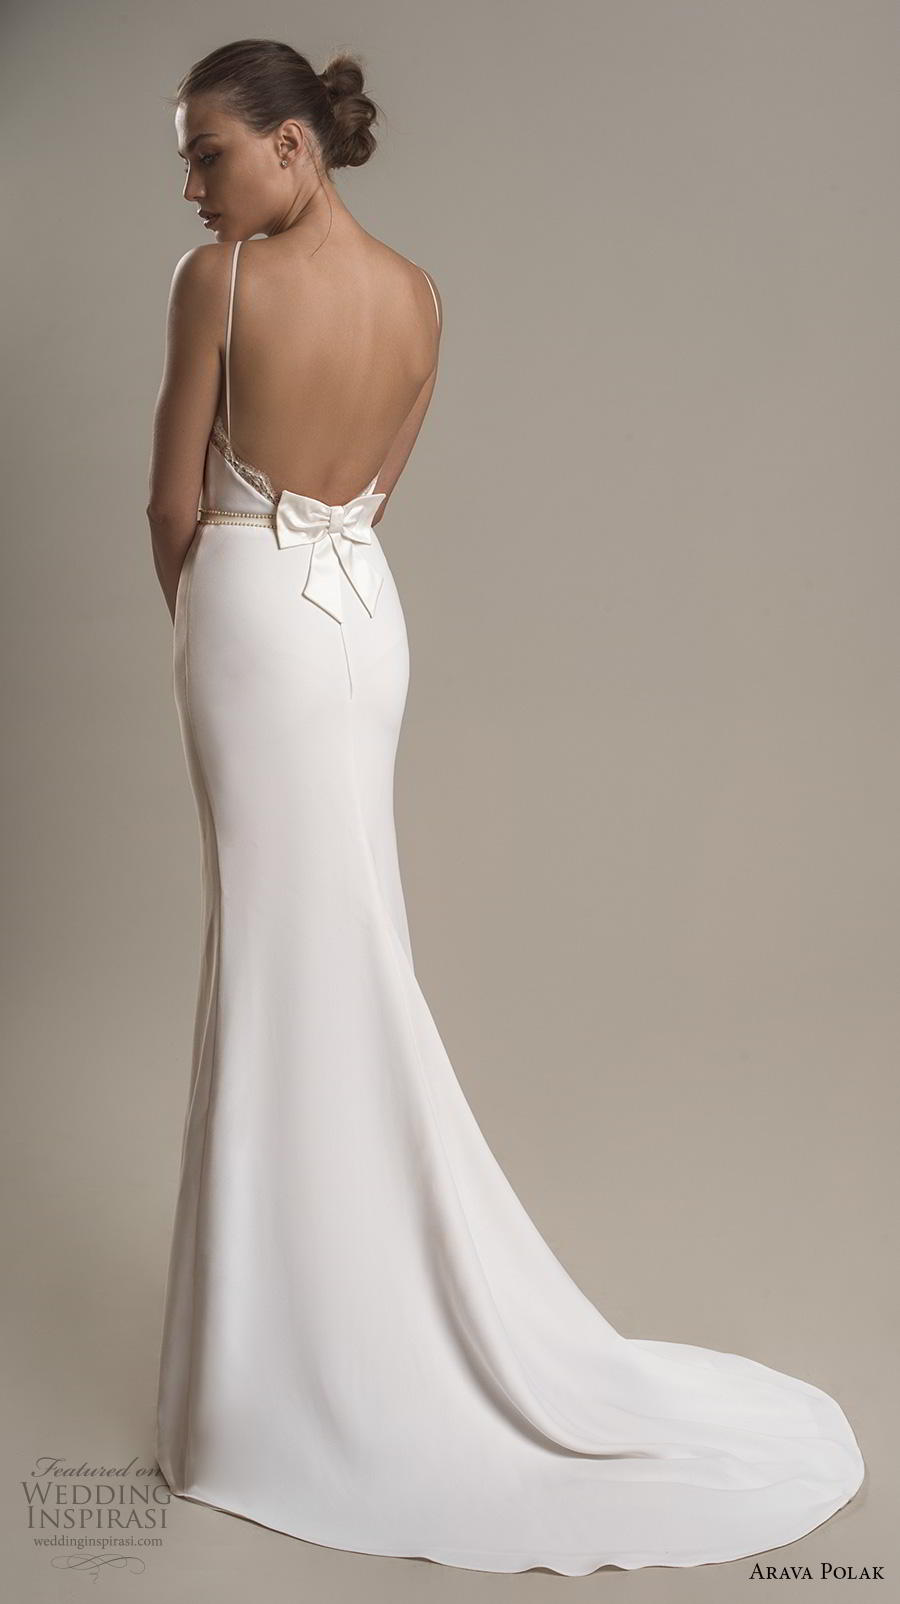 arava polak 2019 bridal sleeveless halter neck simple minimalist elegant classy sheath wedding dress backless ribbon low scoop back short train (10) bv